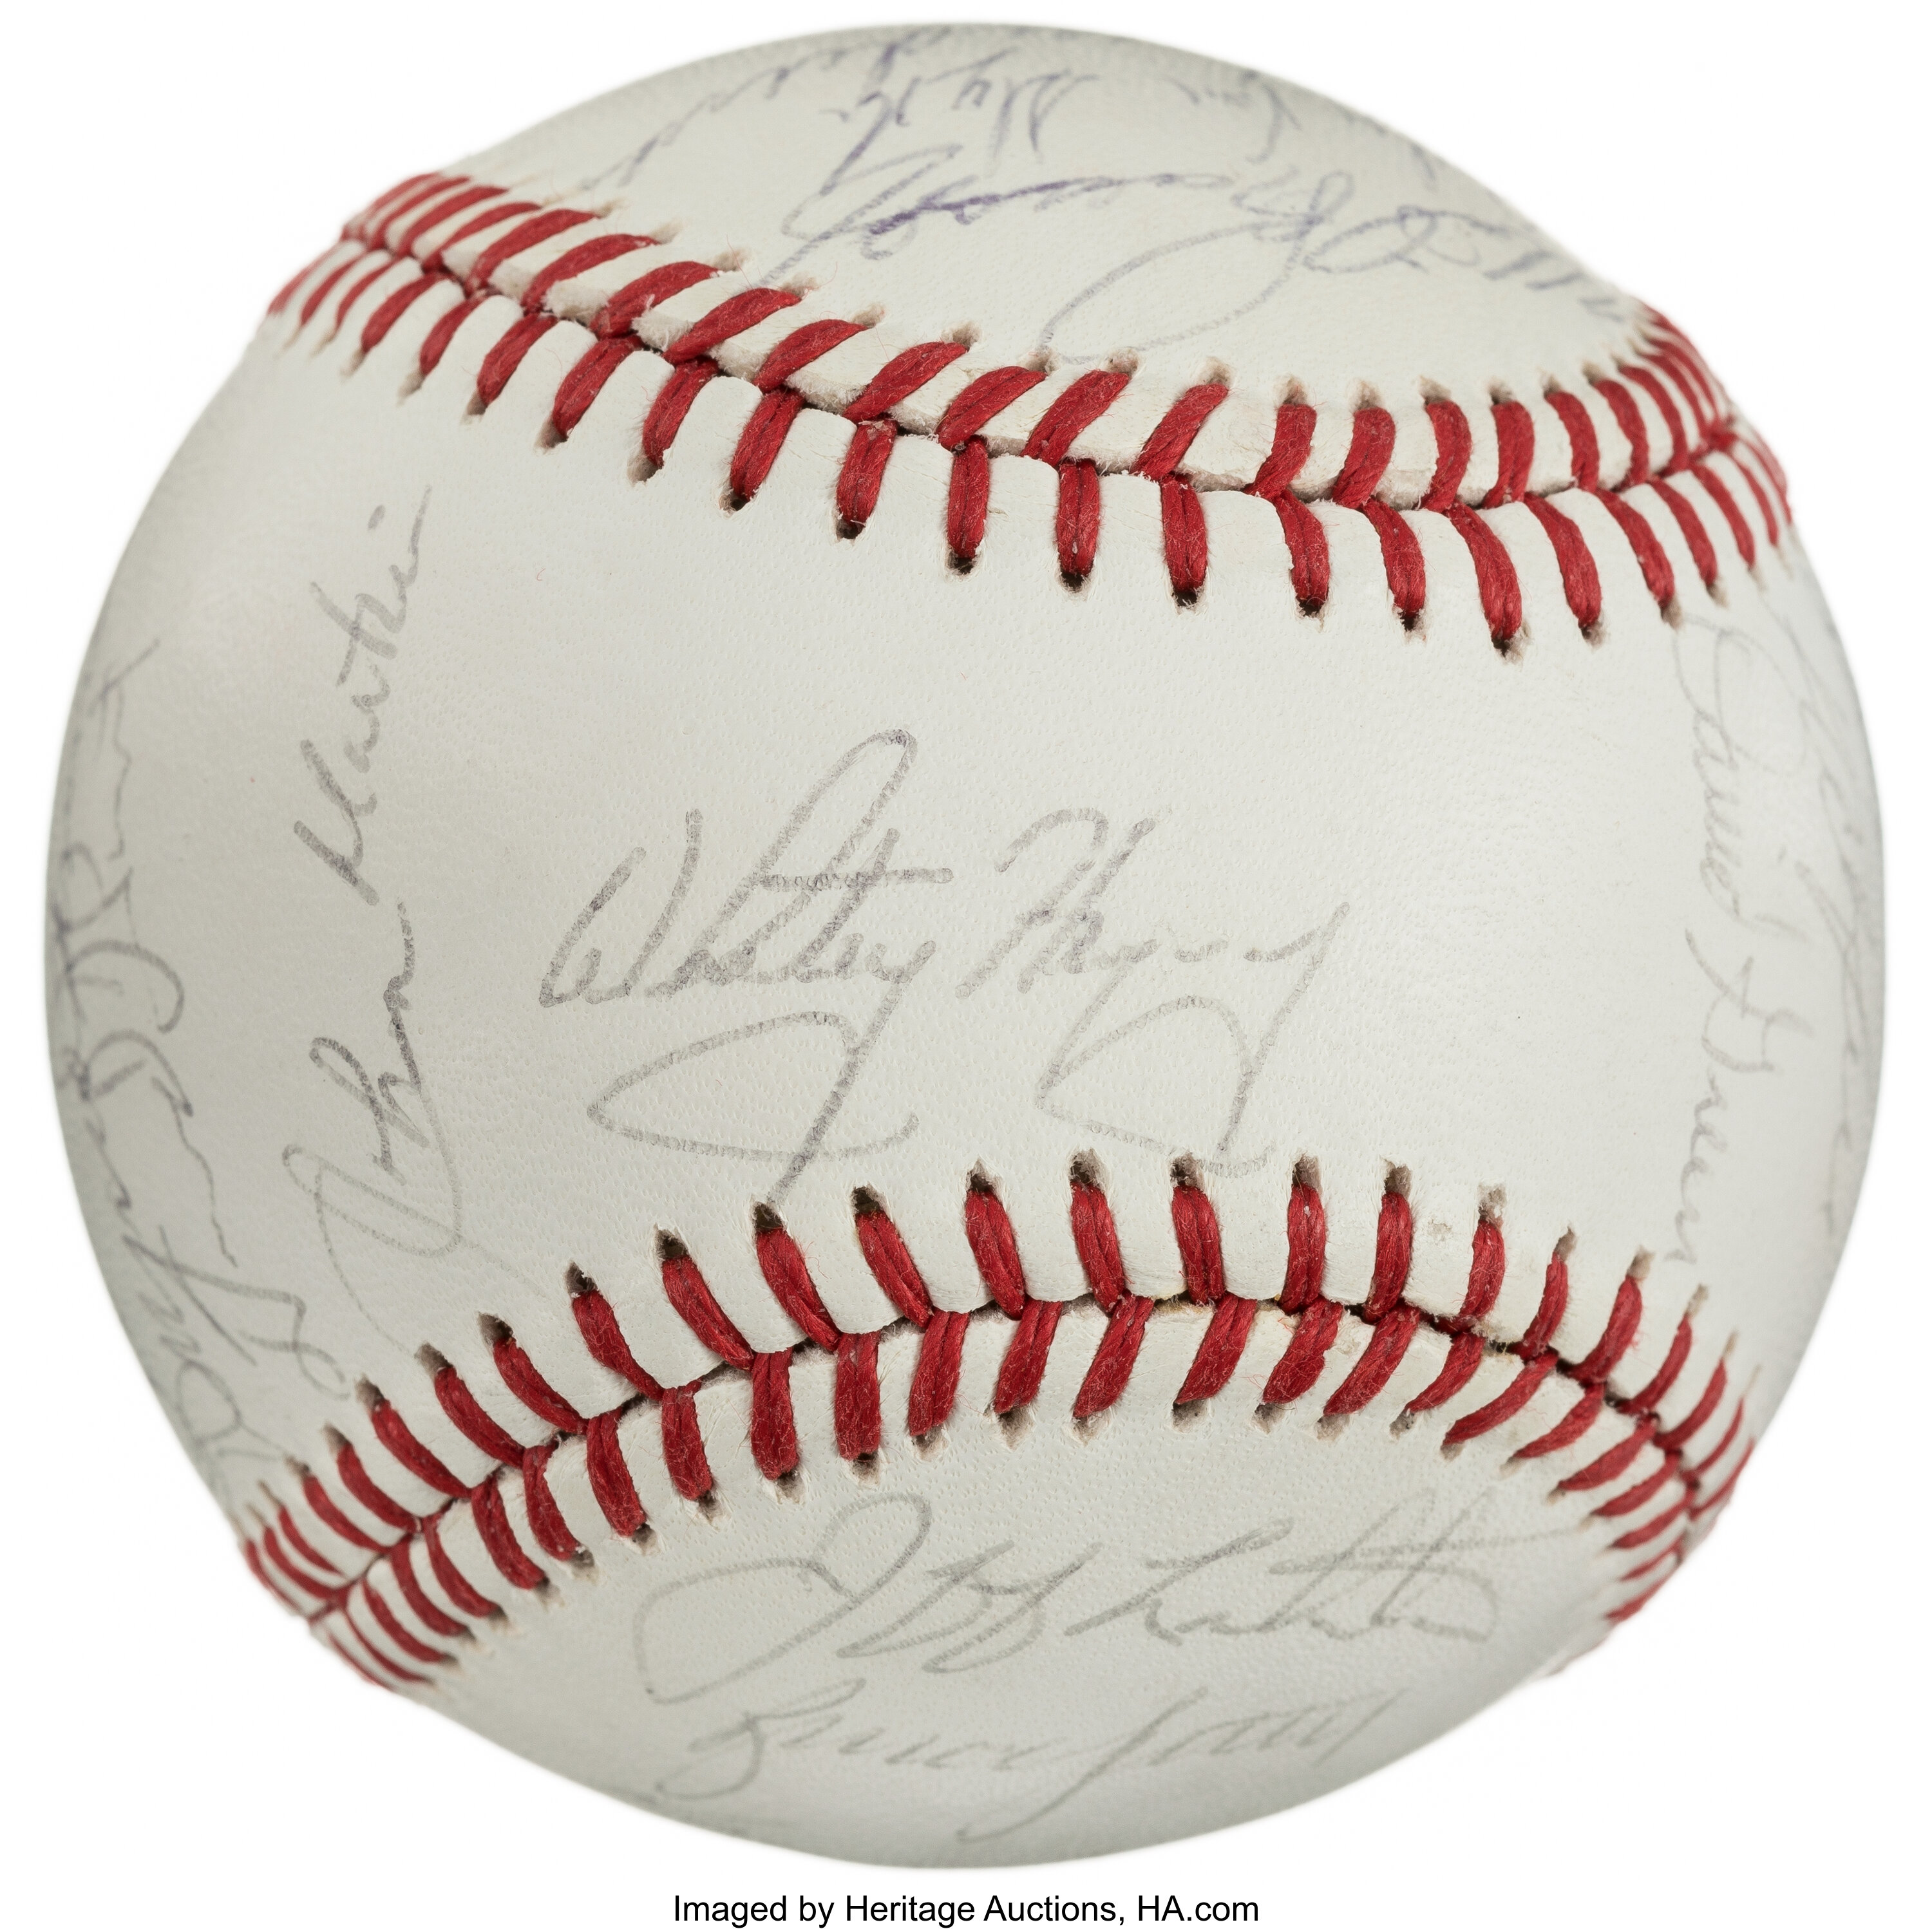 Whitey Herzog autographed Baseball Card (St. Louis Cardinals